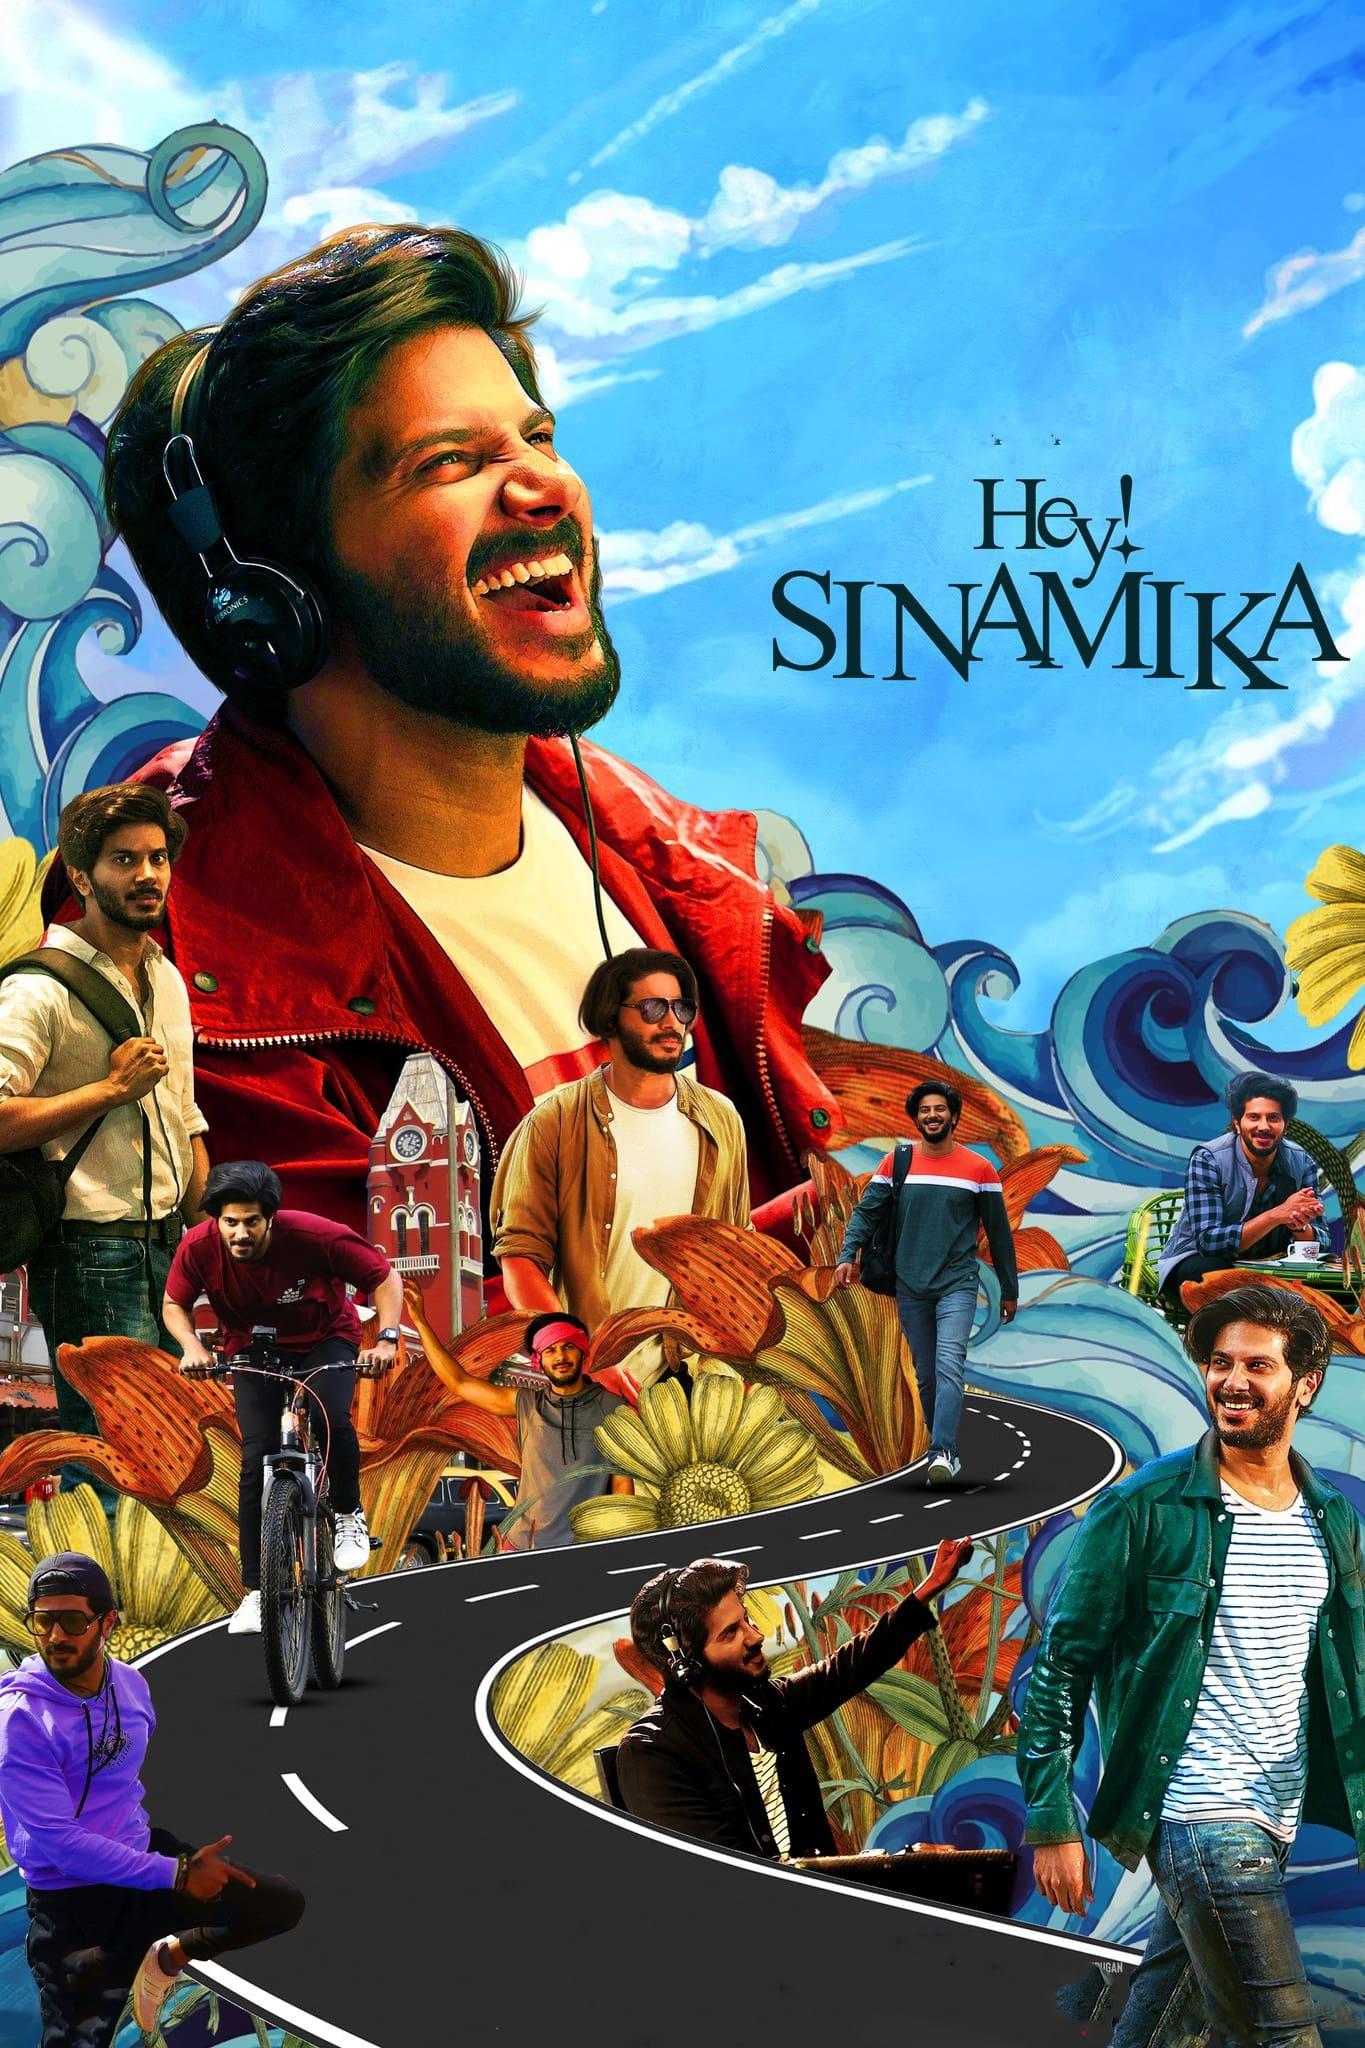 Hey! Sinamika poster